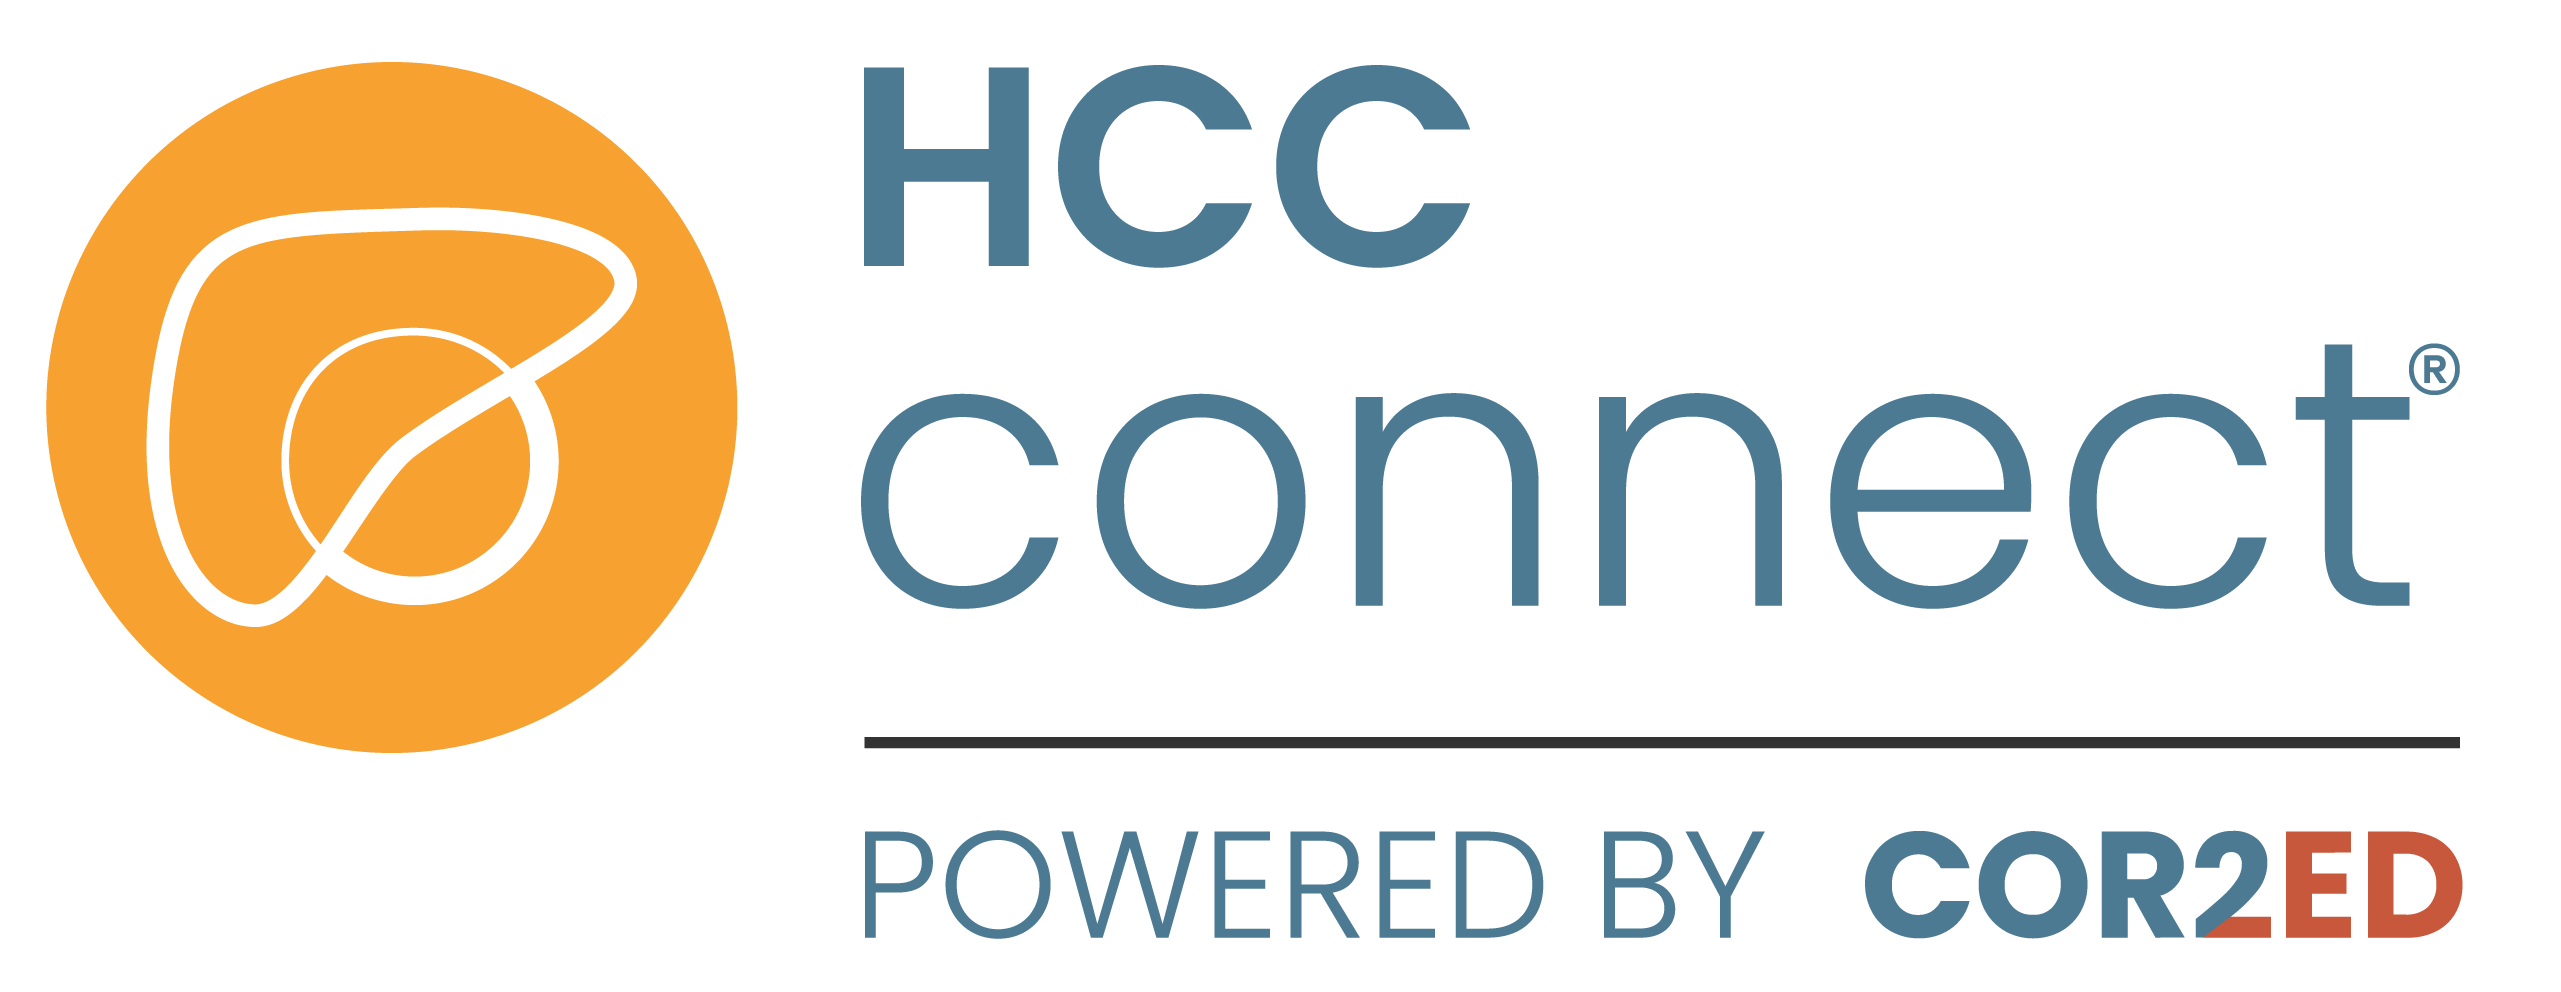 hcc-connect-logo